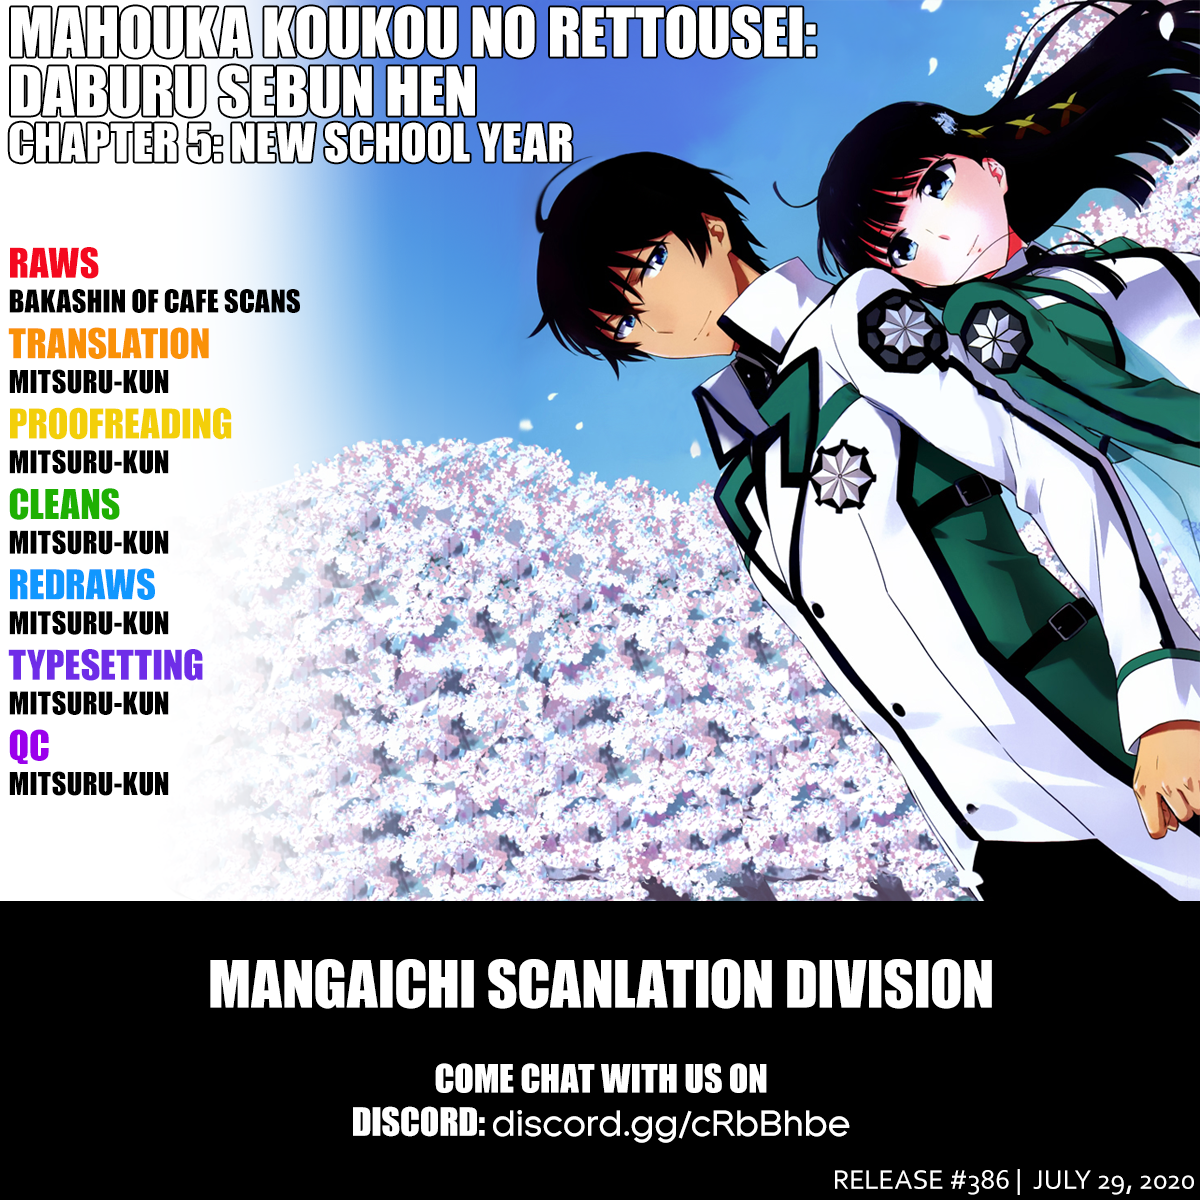 Mahouka Koukou No Rettousei - Double Seven Hen Vol.1 Chapter 5